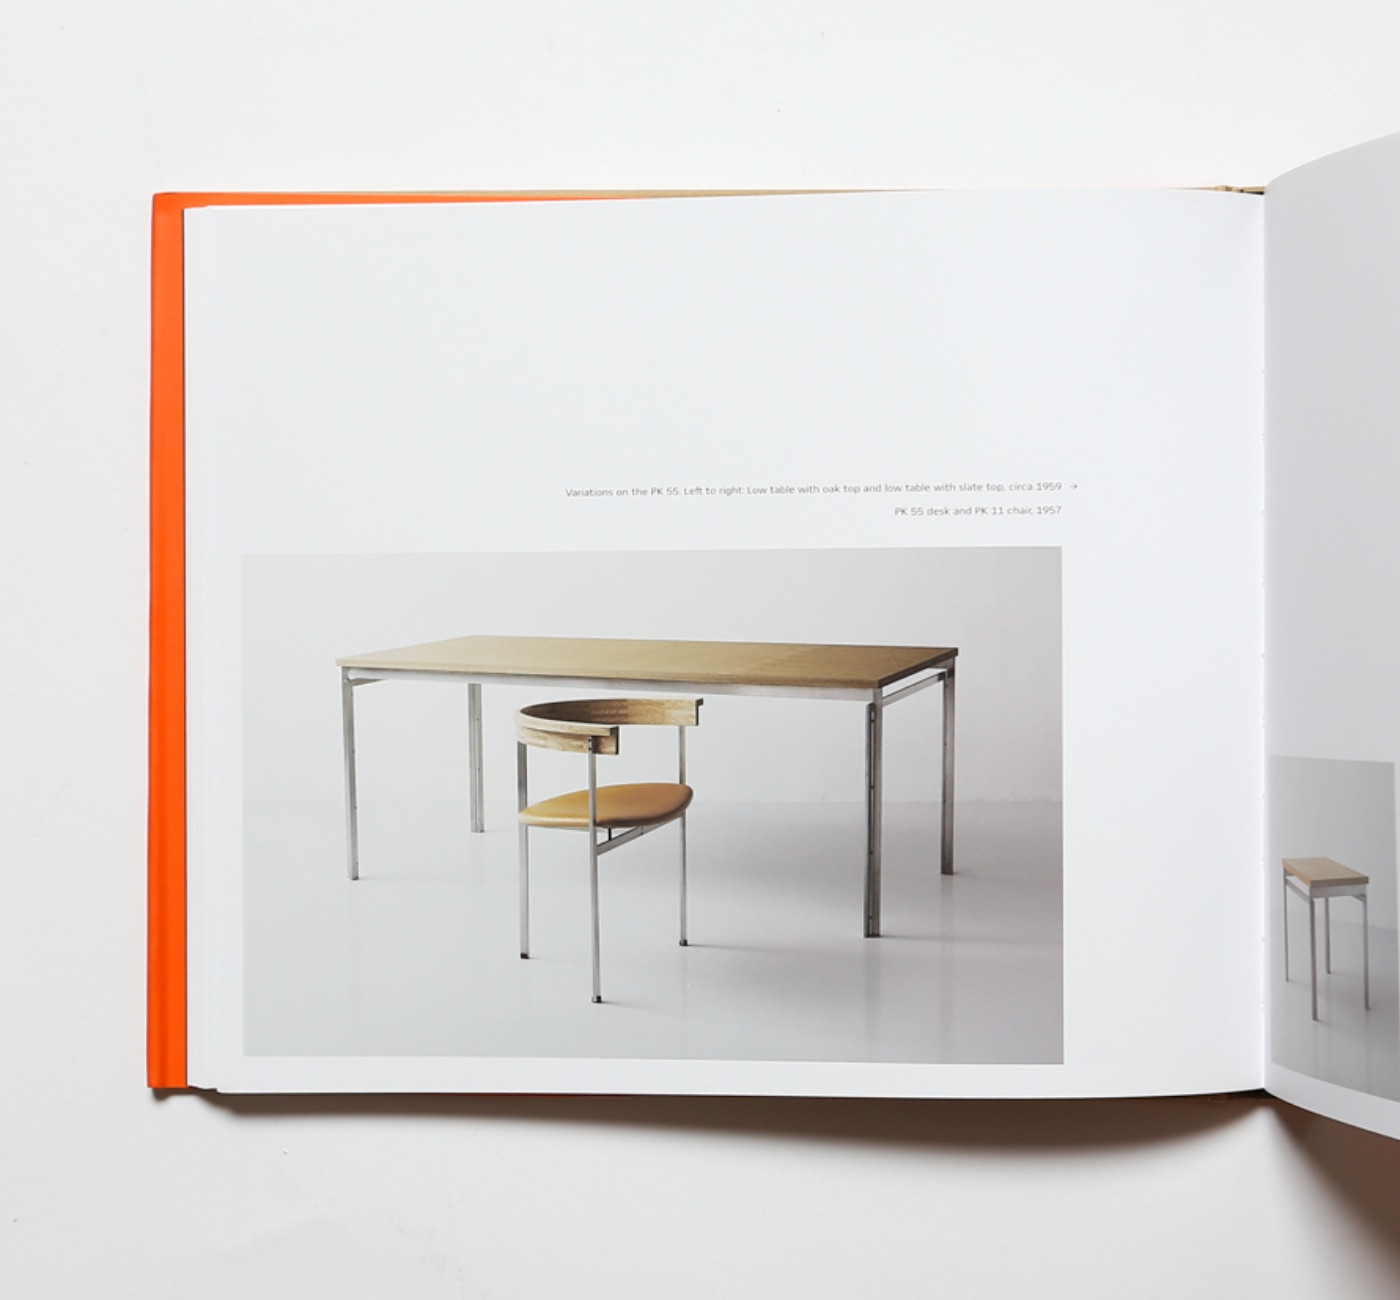 Poul Kjaerholm: Furniture Architect